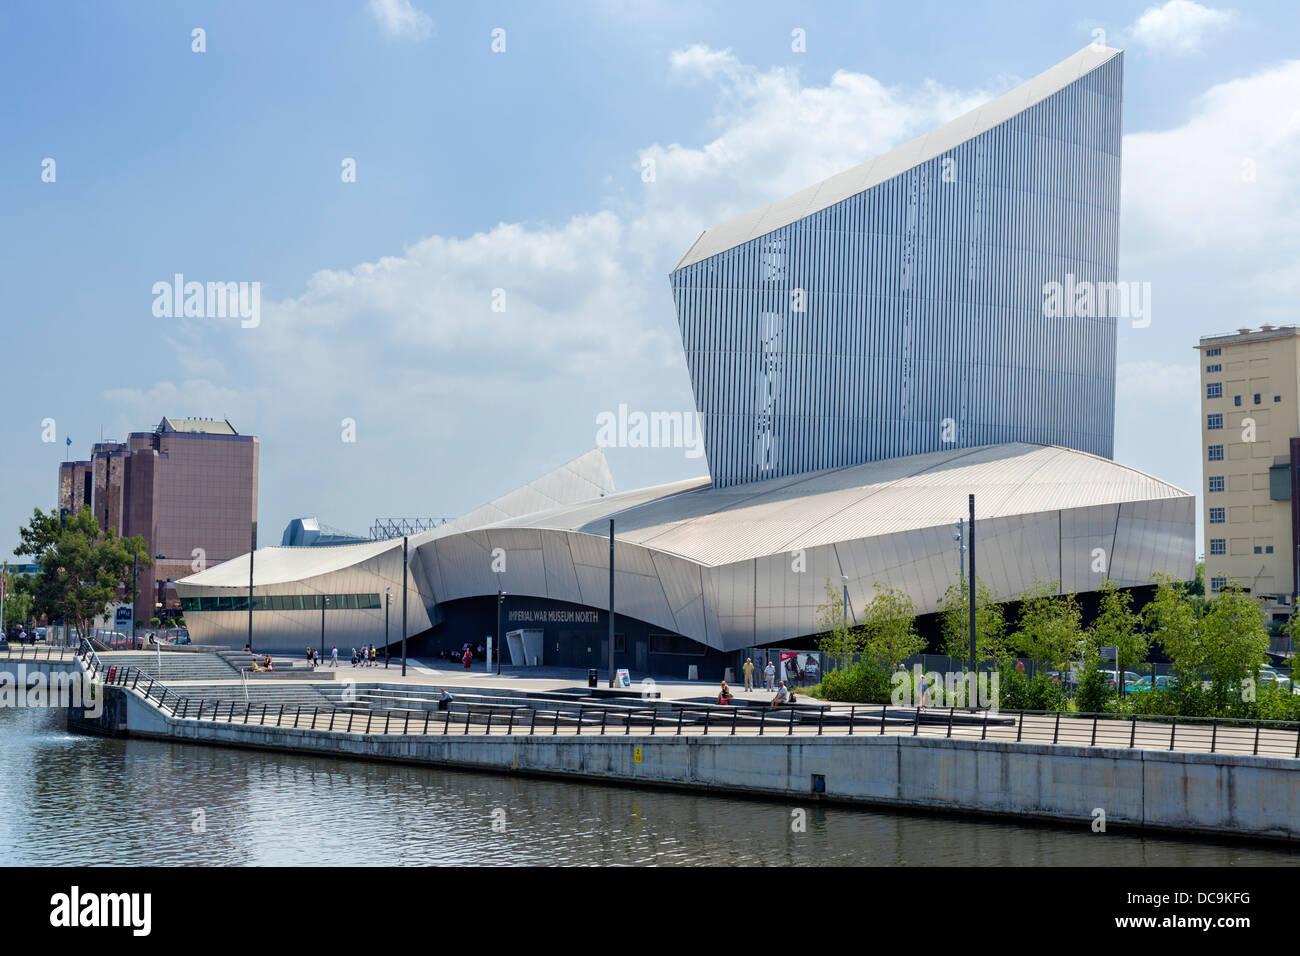 L'Imperial War Museum North conçu par l'architecte Daniel Libeskind, Salford Quays, Manchester, Angleterre, RU Banque D'Images